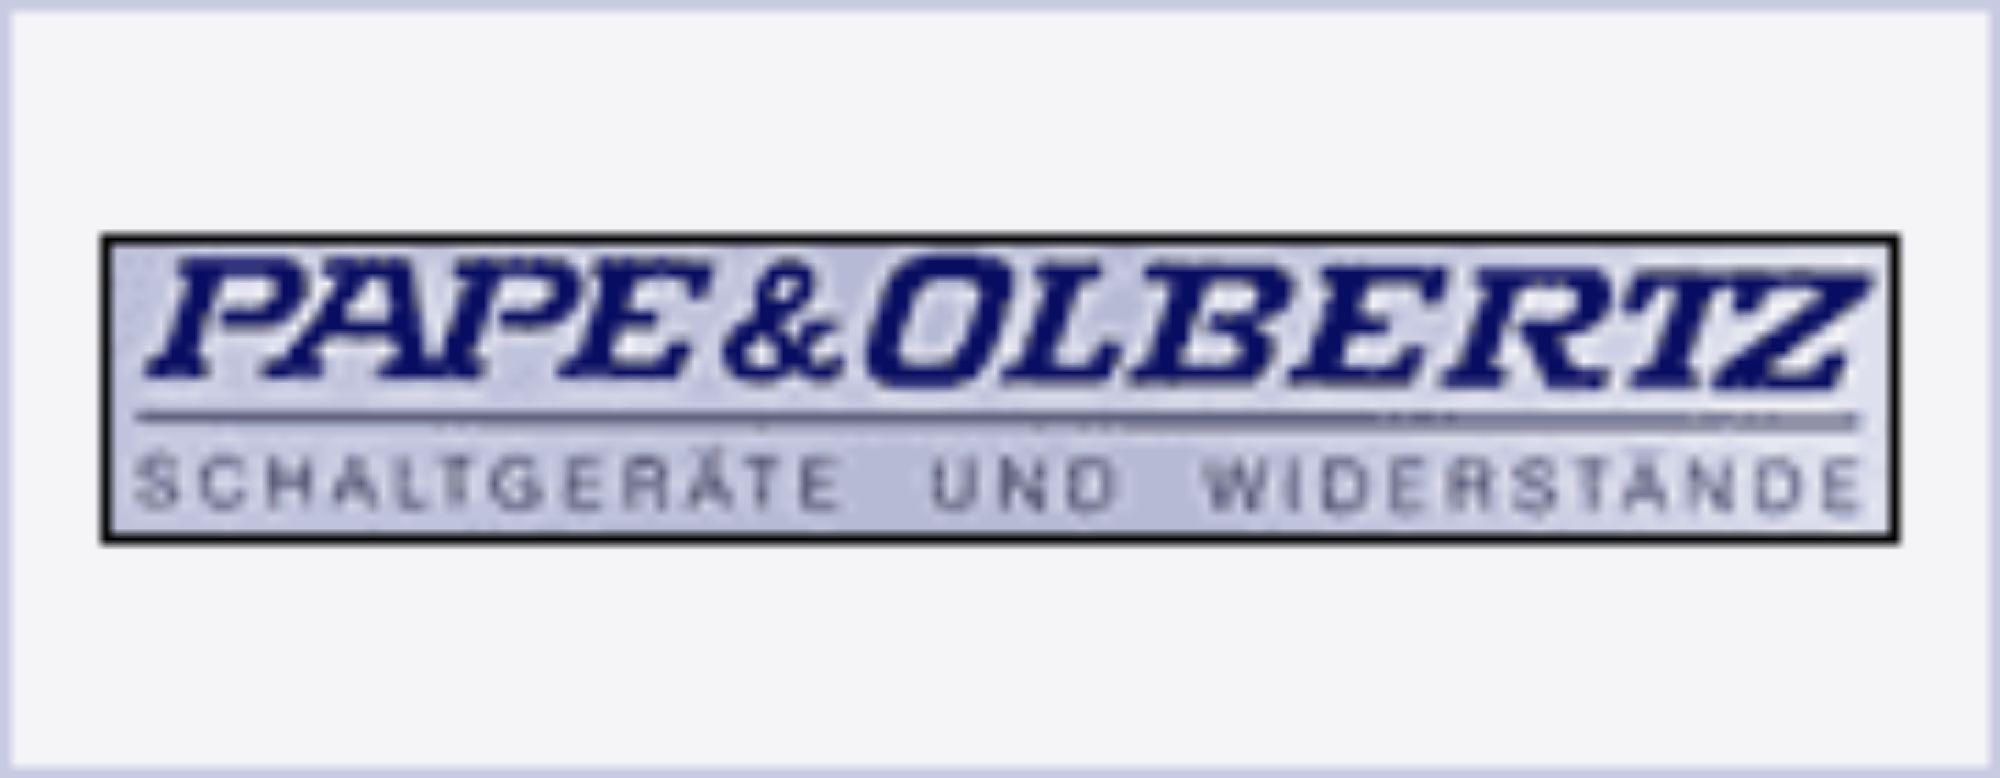 Pape & Olbertz logo